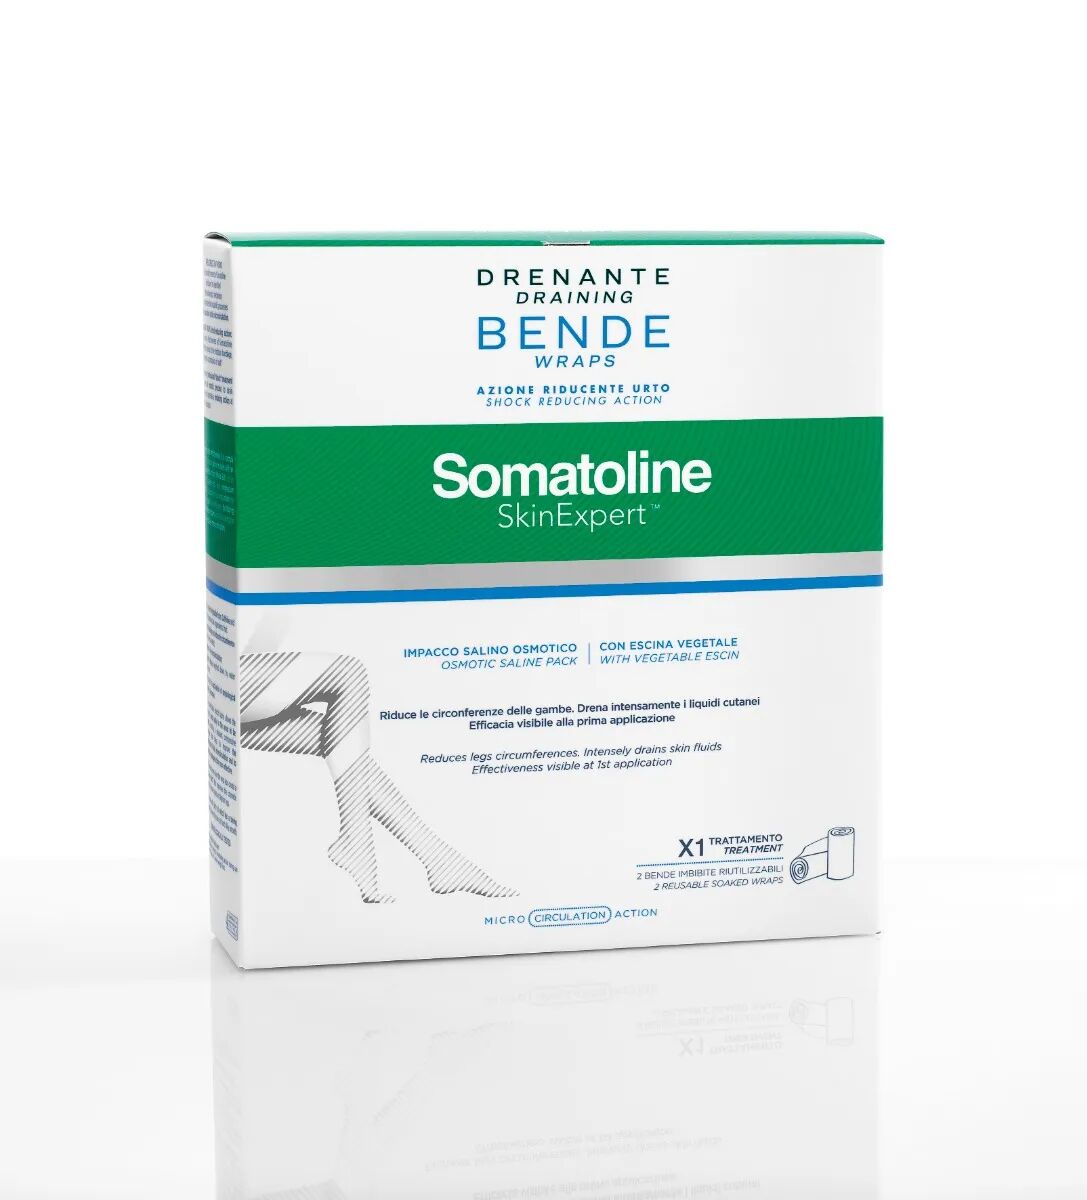 somatoline skinexpert somatoline skin expert bende snellenti drenanti azione riducente urto 1 applicazione